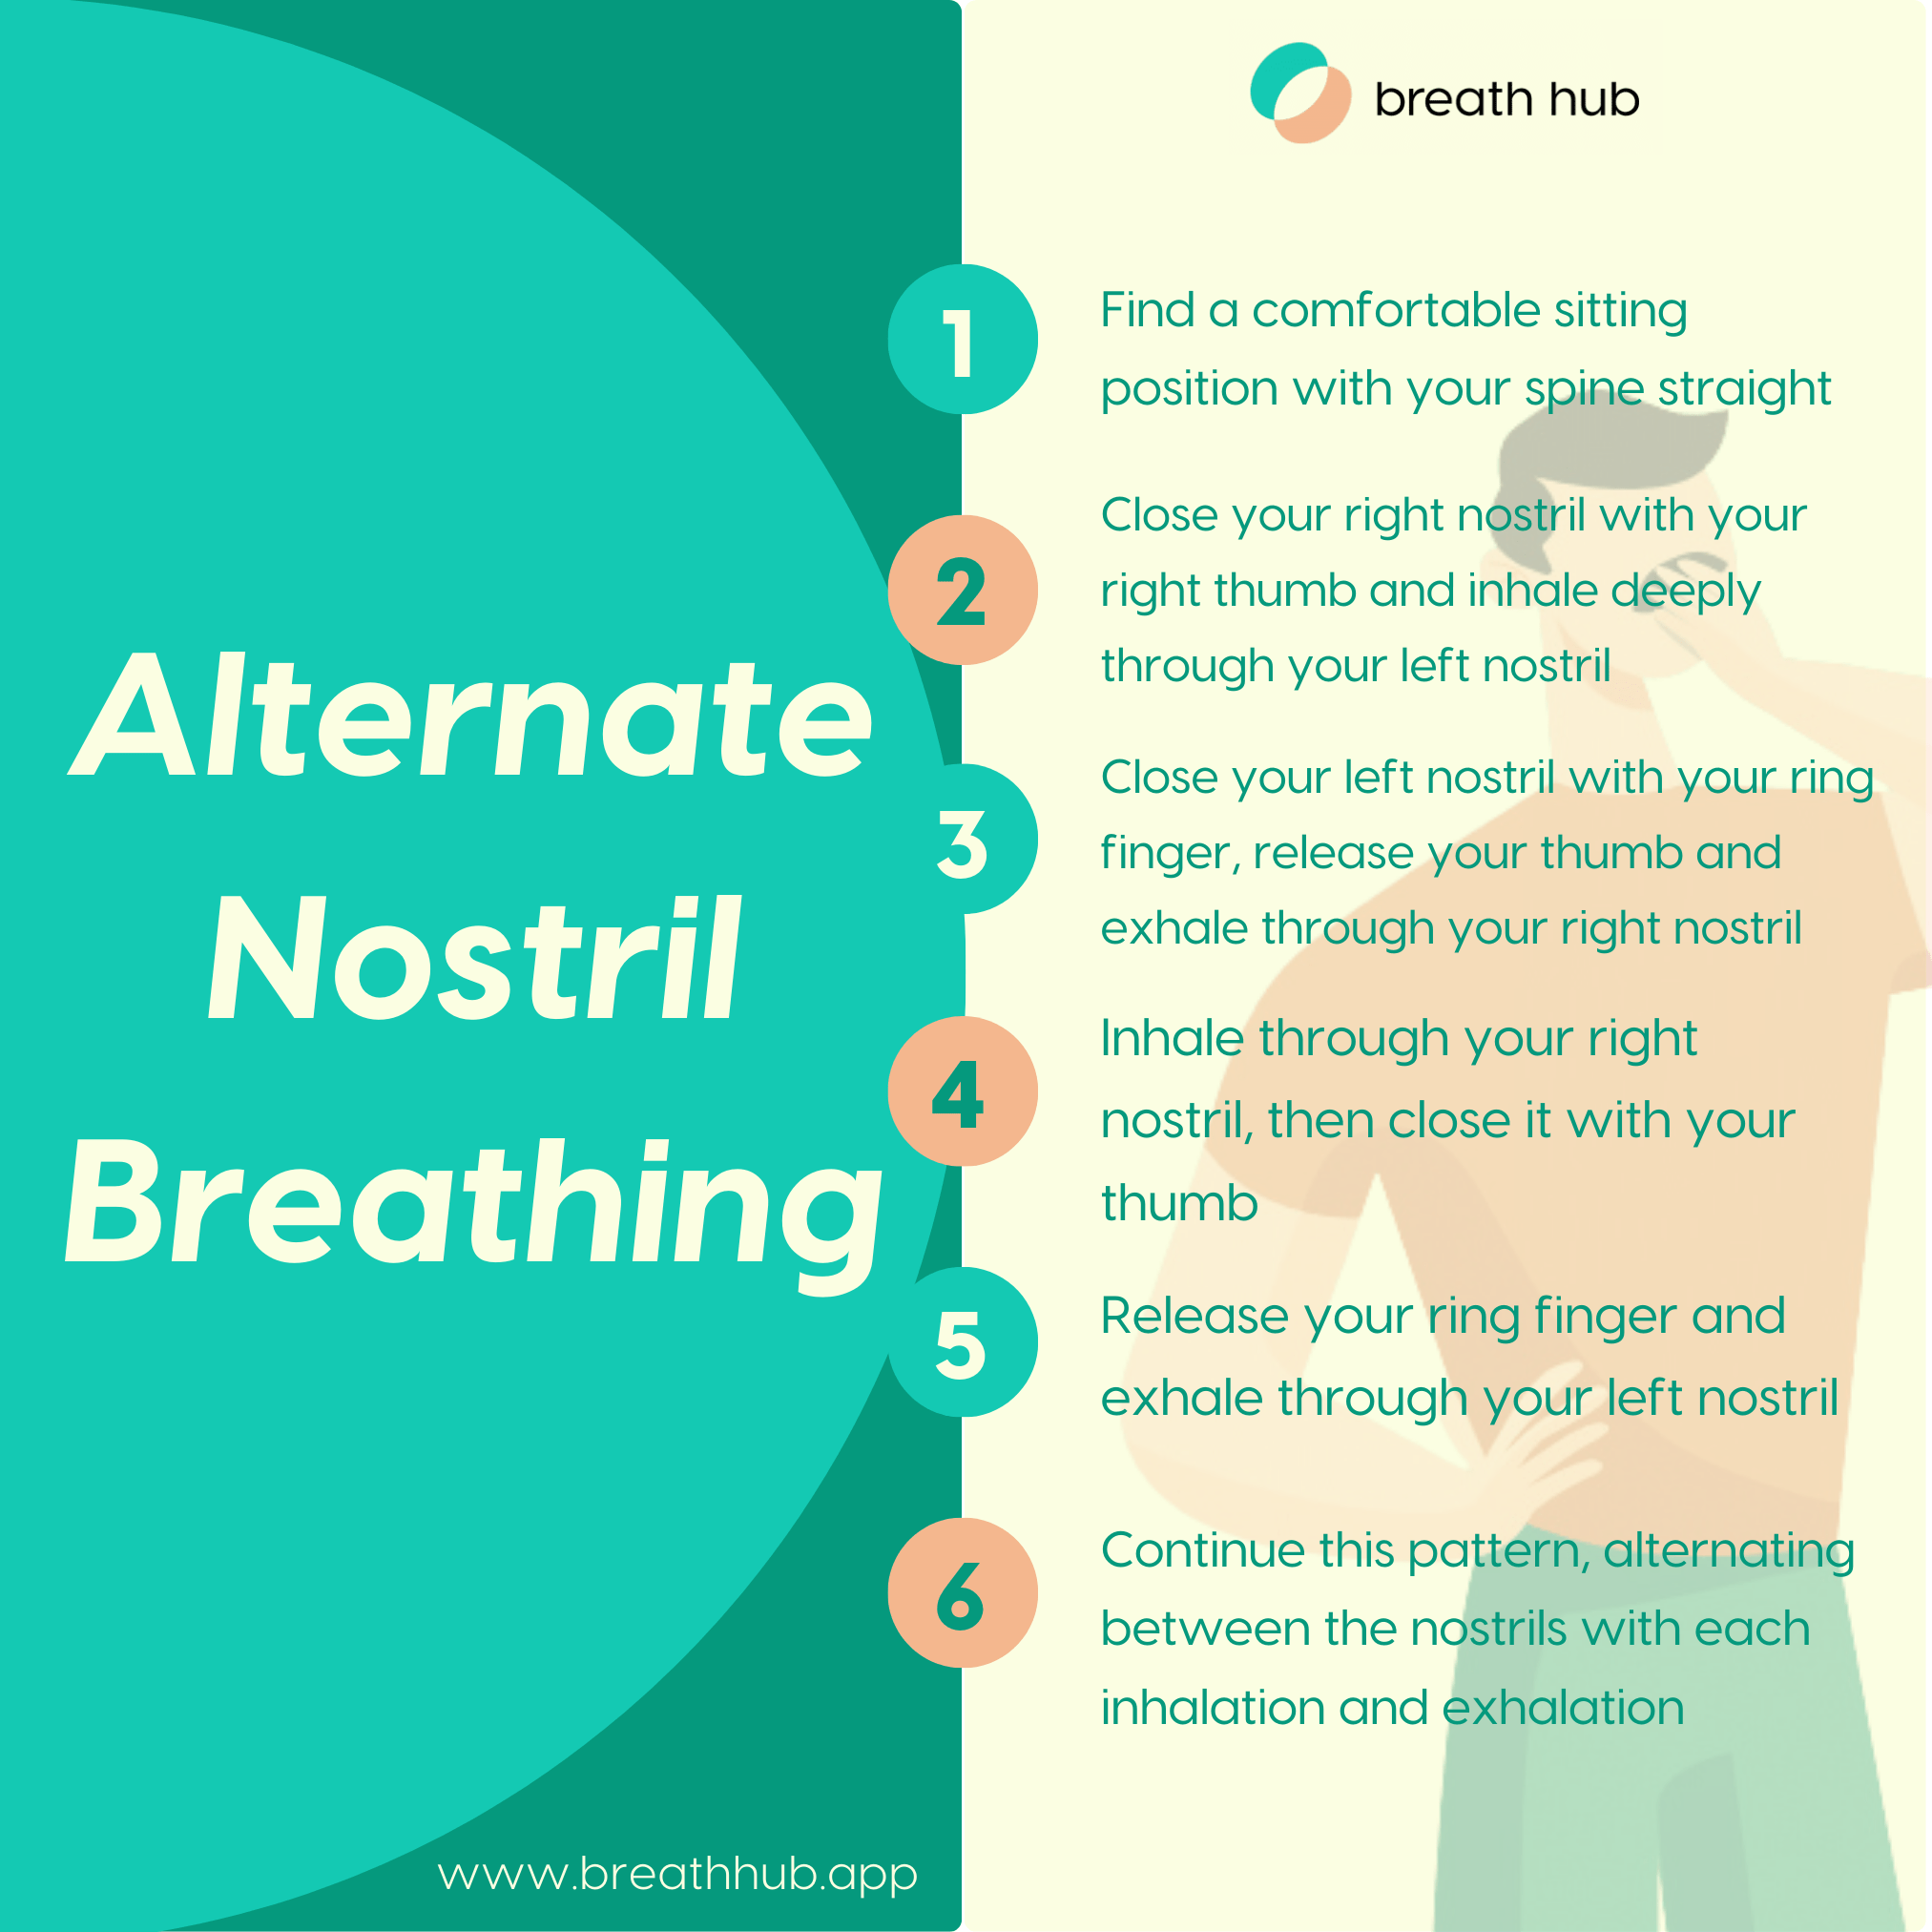 How to Practice Alternate Nostril Breathing for Digital Detox? - Breath Hub